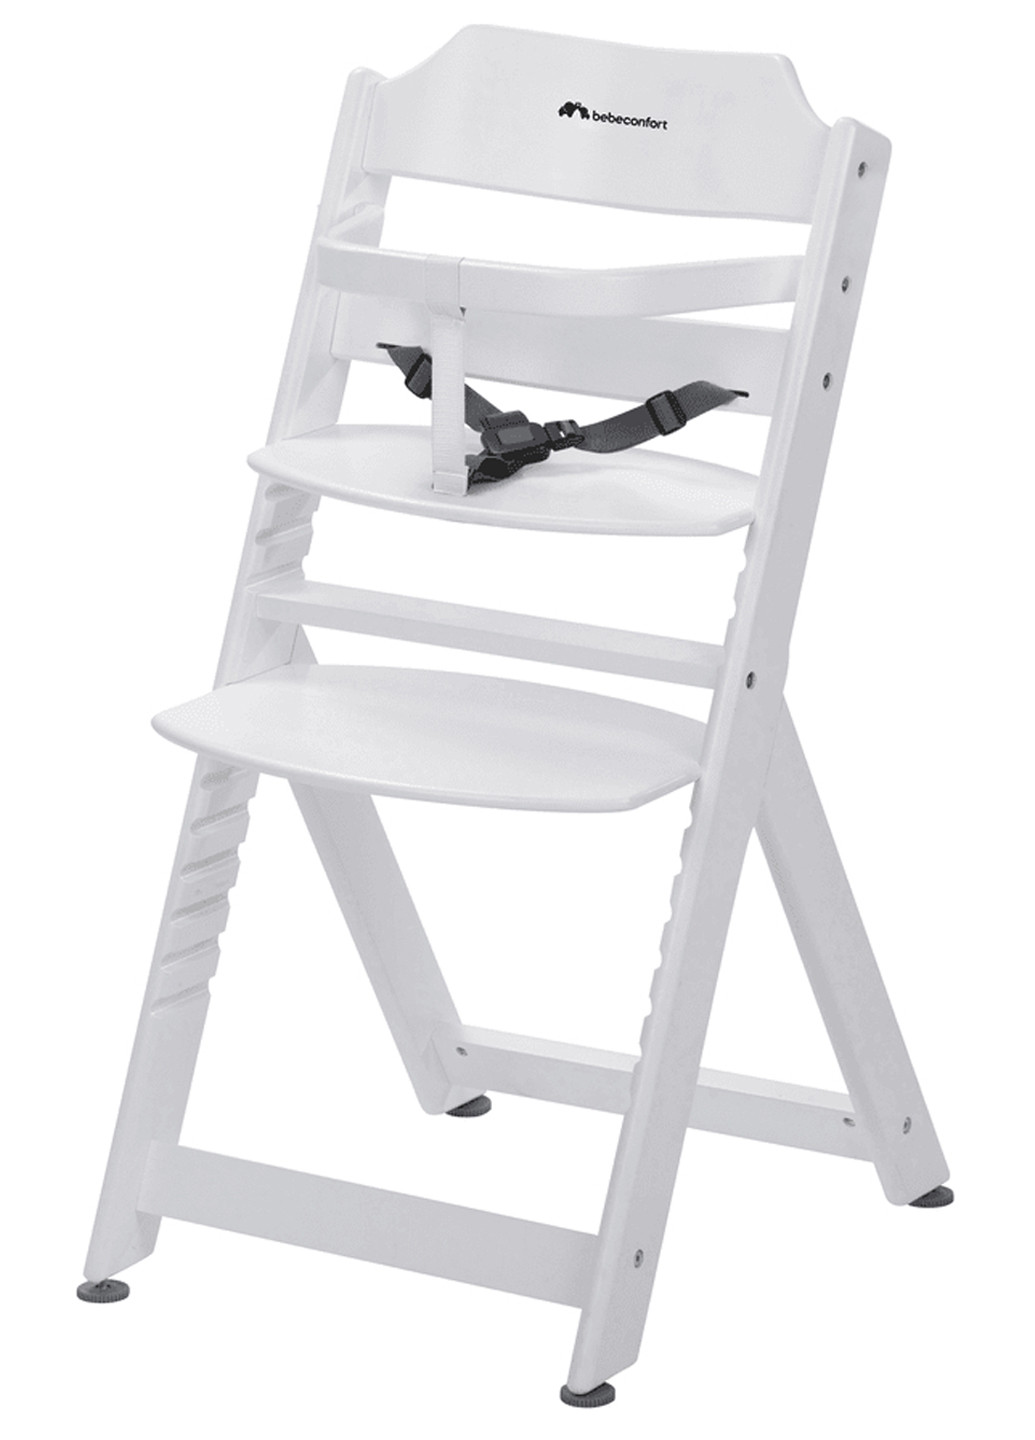 Детский стул для кормления Lidl bebe confort timba white (259364585)